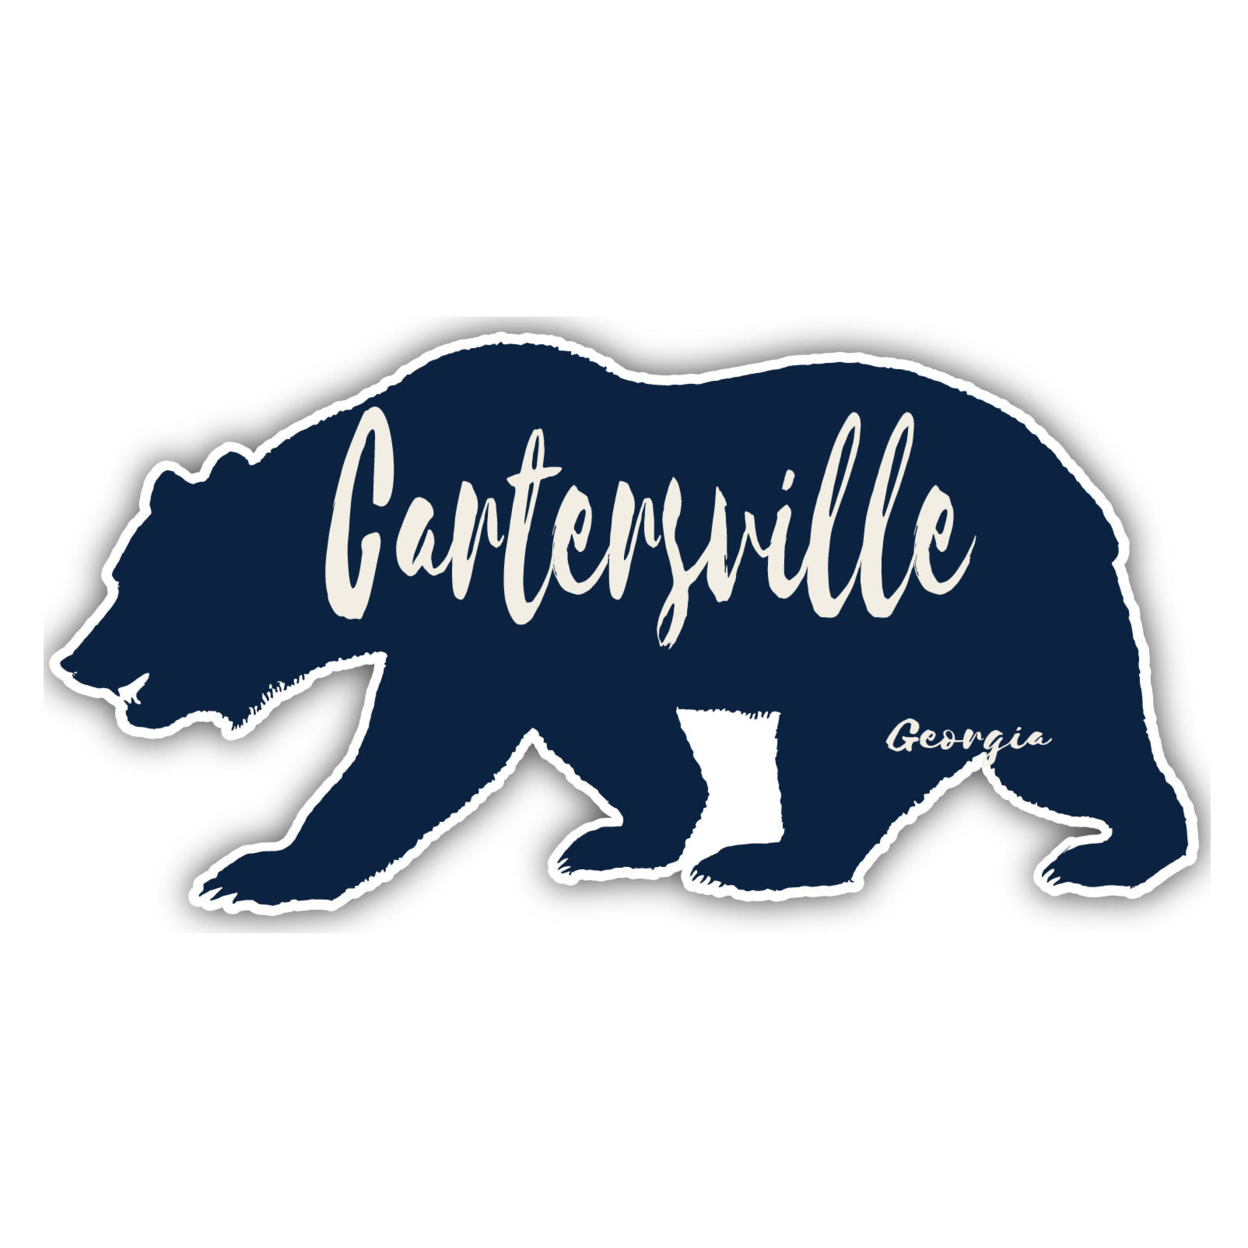 Cartersville Georgia Souvenir Decorative Stickers (Choose Theme And Size) - 4-Pack, 8-Inch, Bear